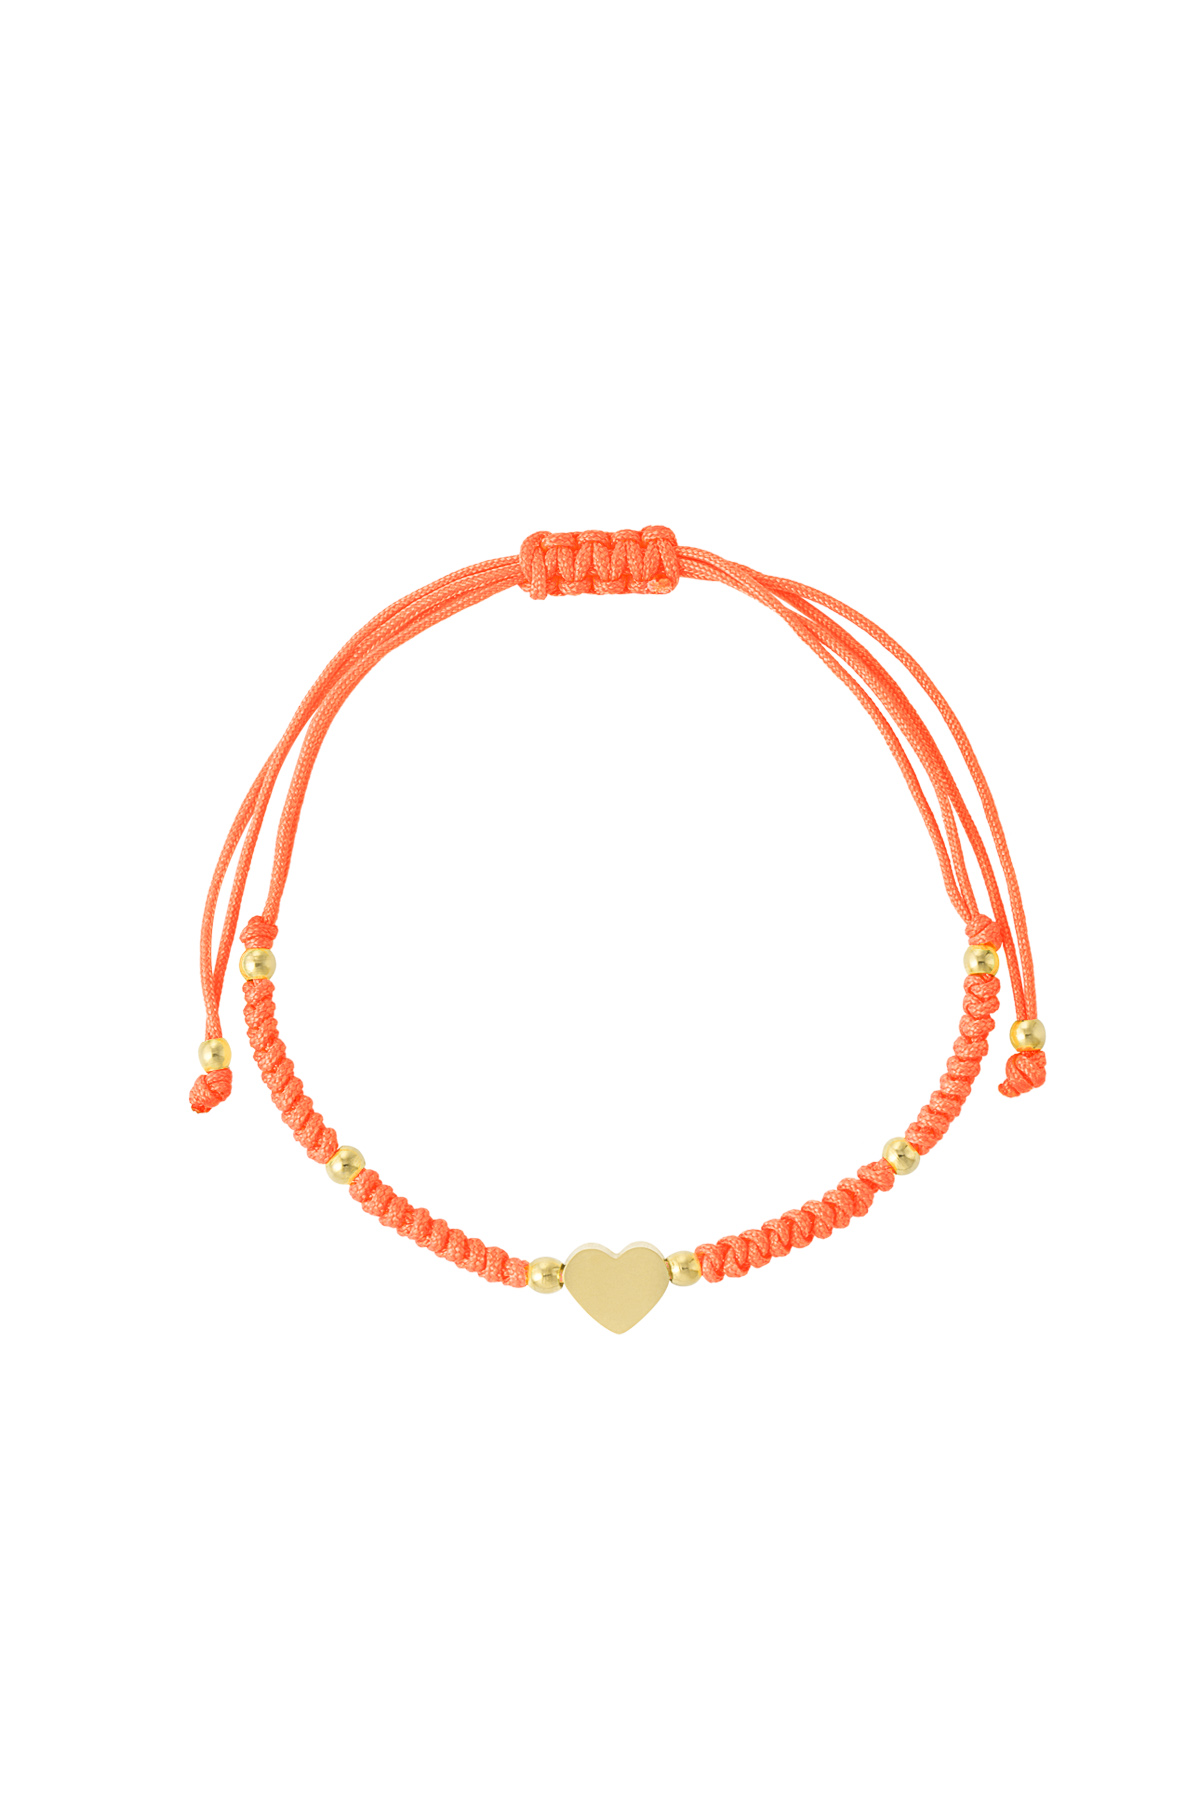 Braided bracelet with heart - orange/gold  